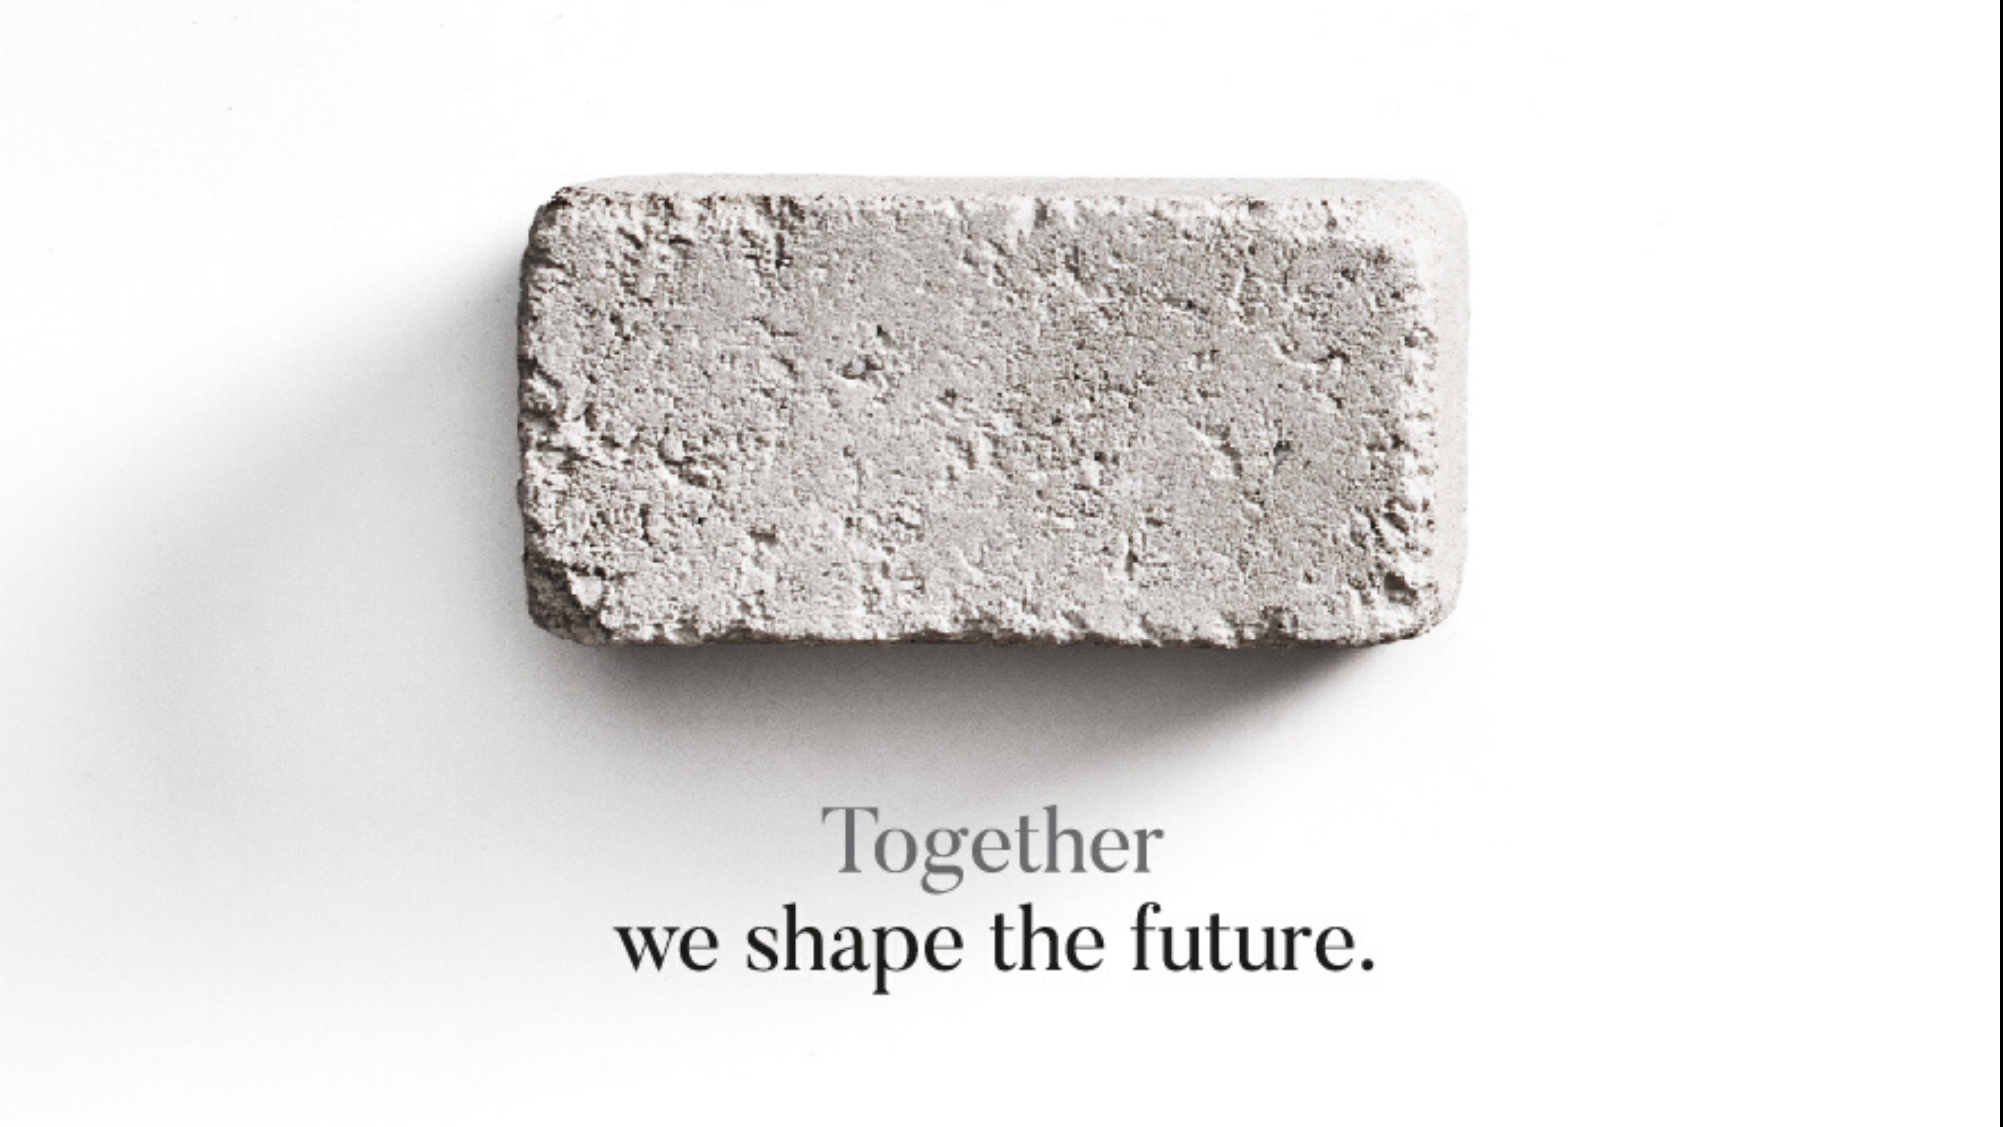 Together we shape the future